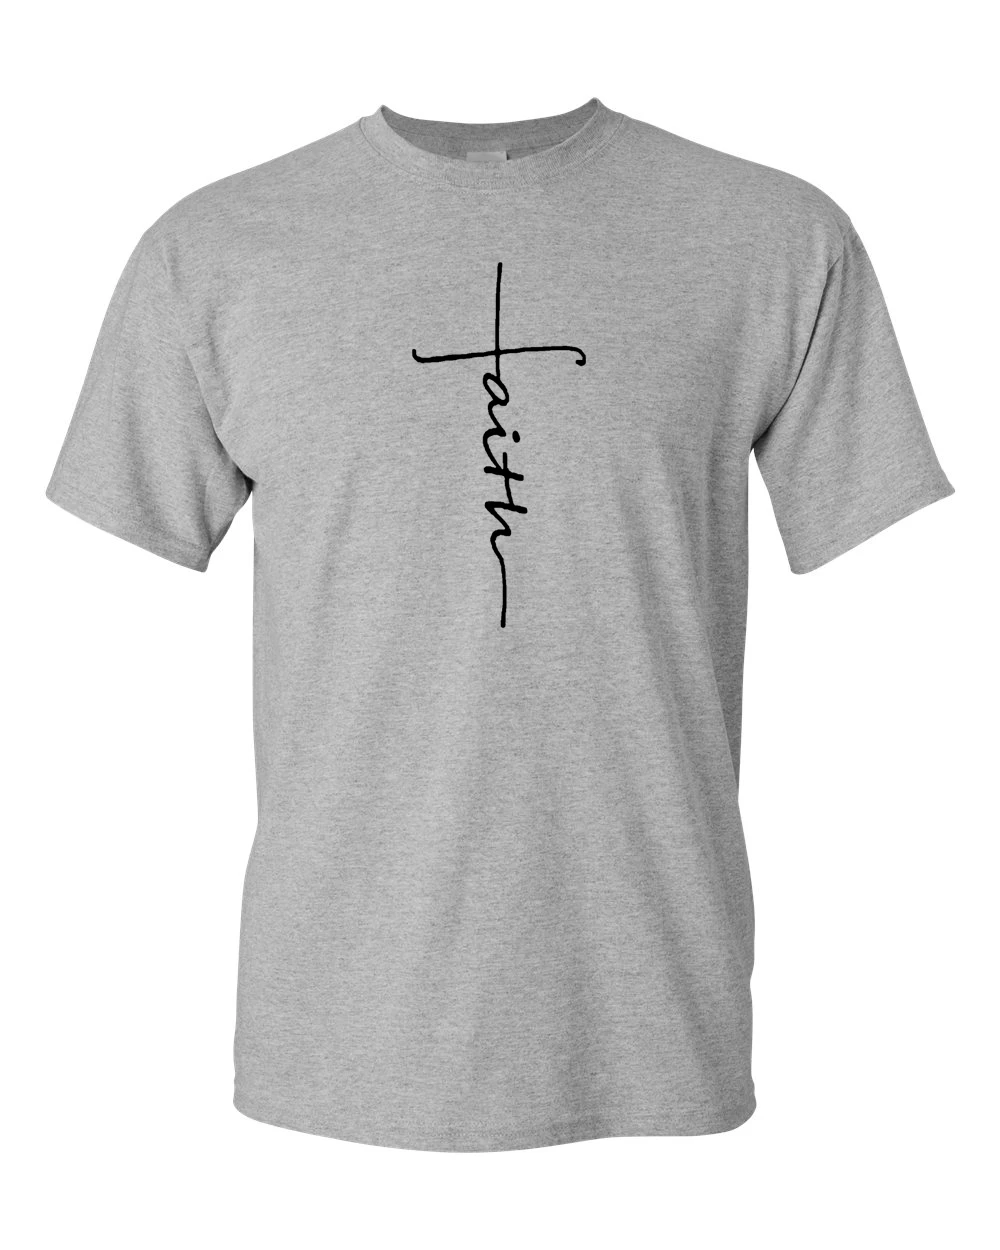 Tro Cross T-Shirt, Christian Tees Religiøse Tees